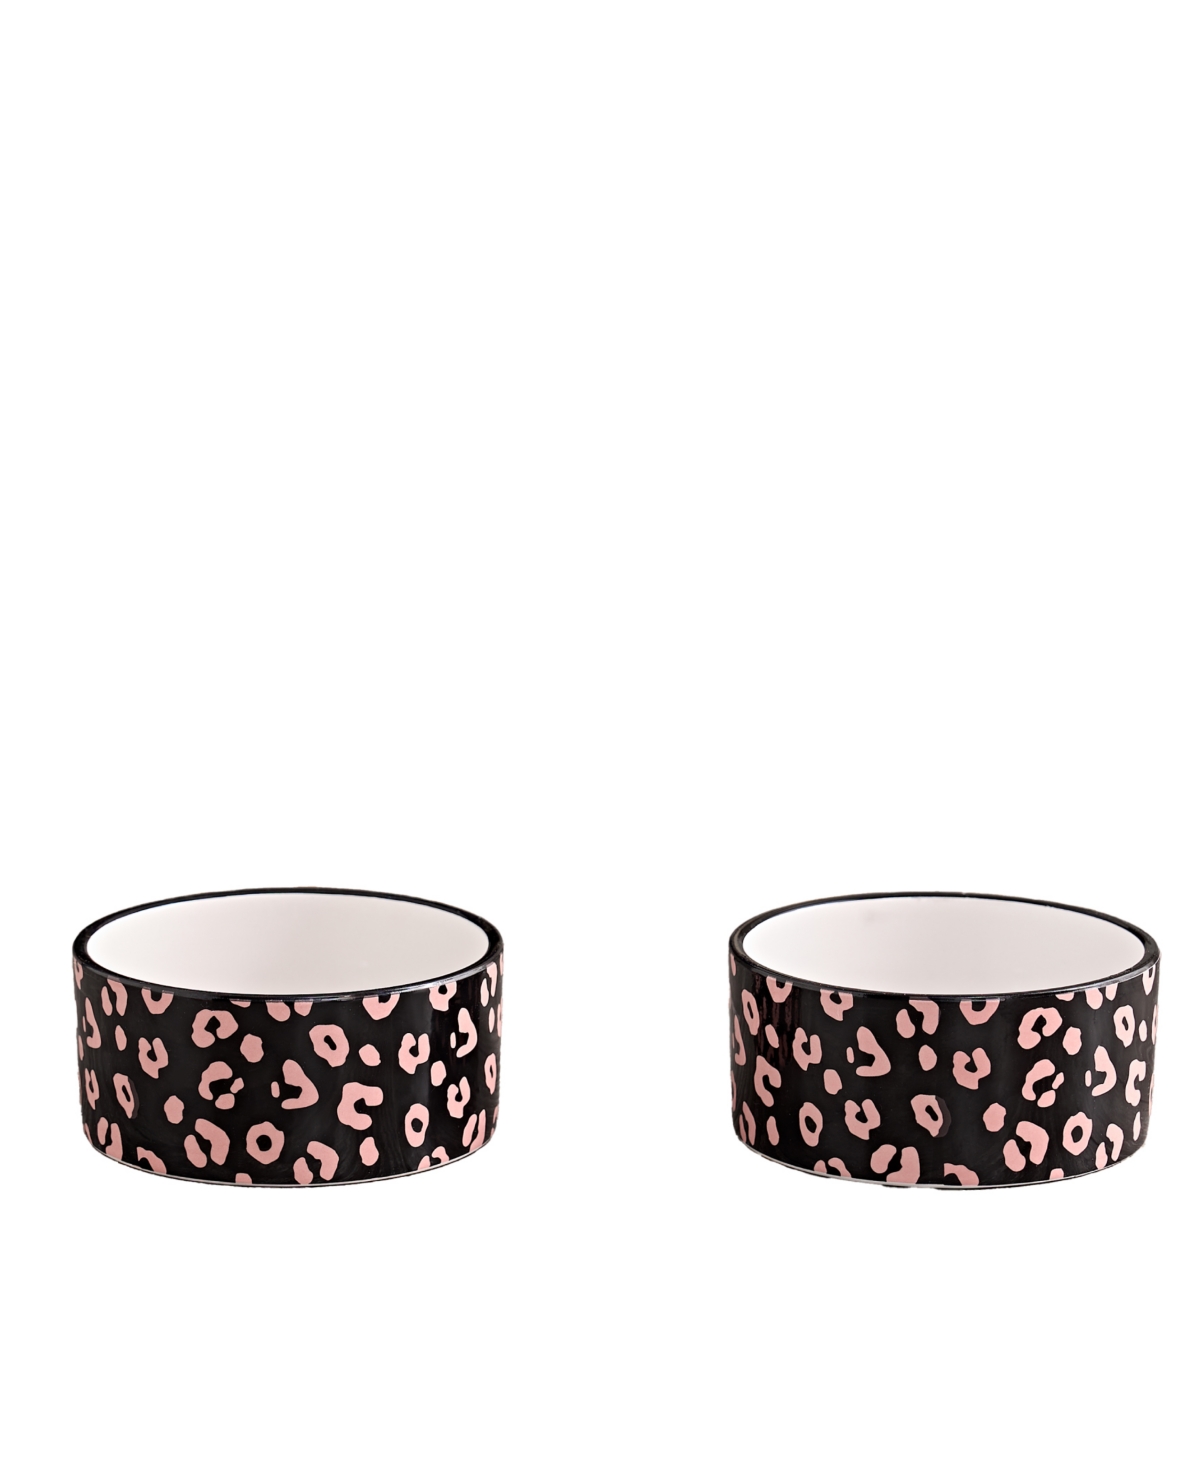 Give Me Treats Pet Bowl Leopard 16 oz Ceramic Bowls, Set of 2 - Pink